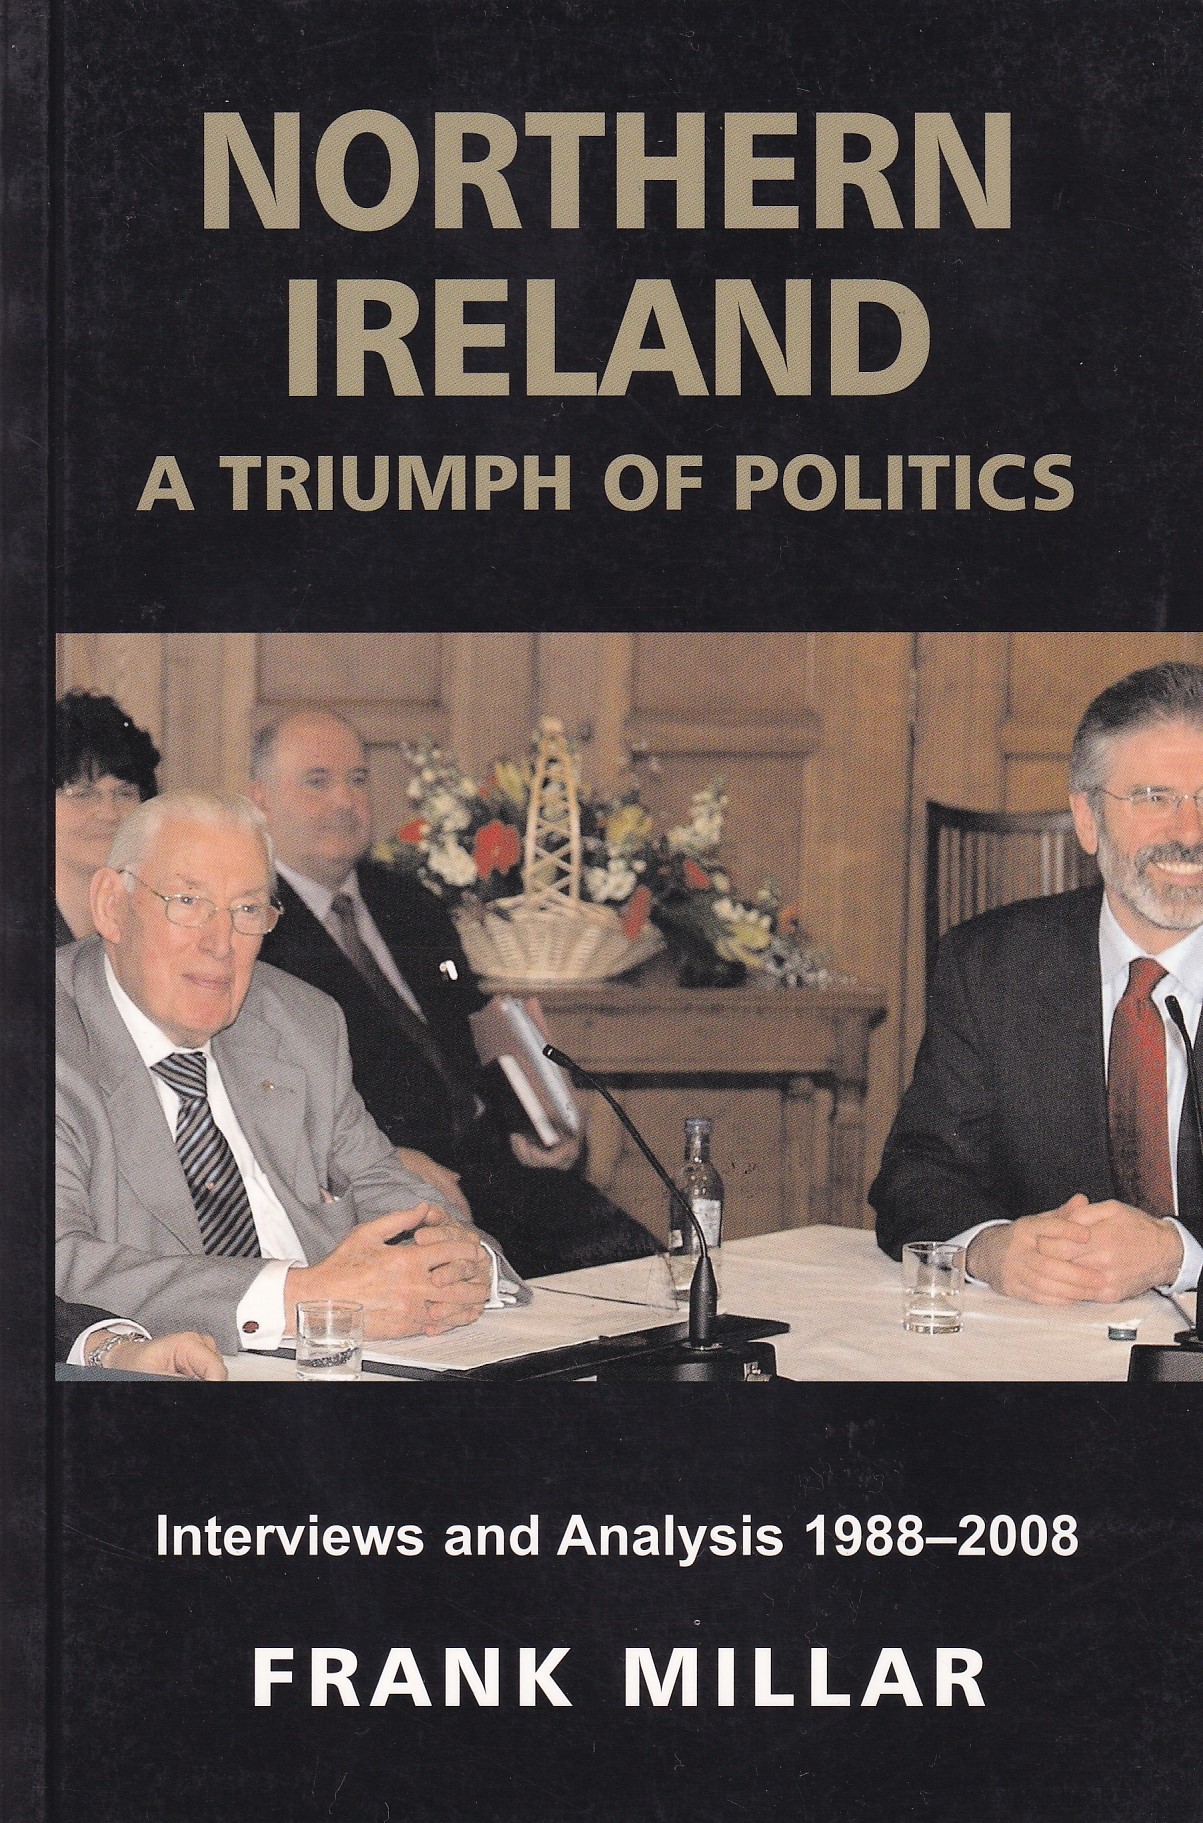 Northern Ireland: A Triumph of Politics: Interviews and Analysis 1988-2008 by Millar, Frank